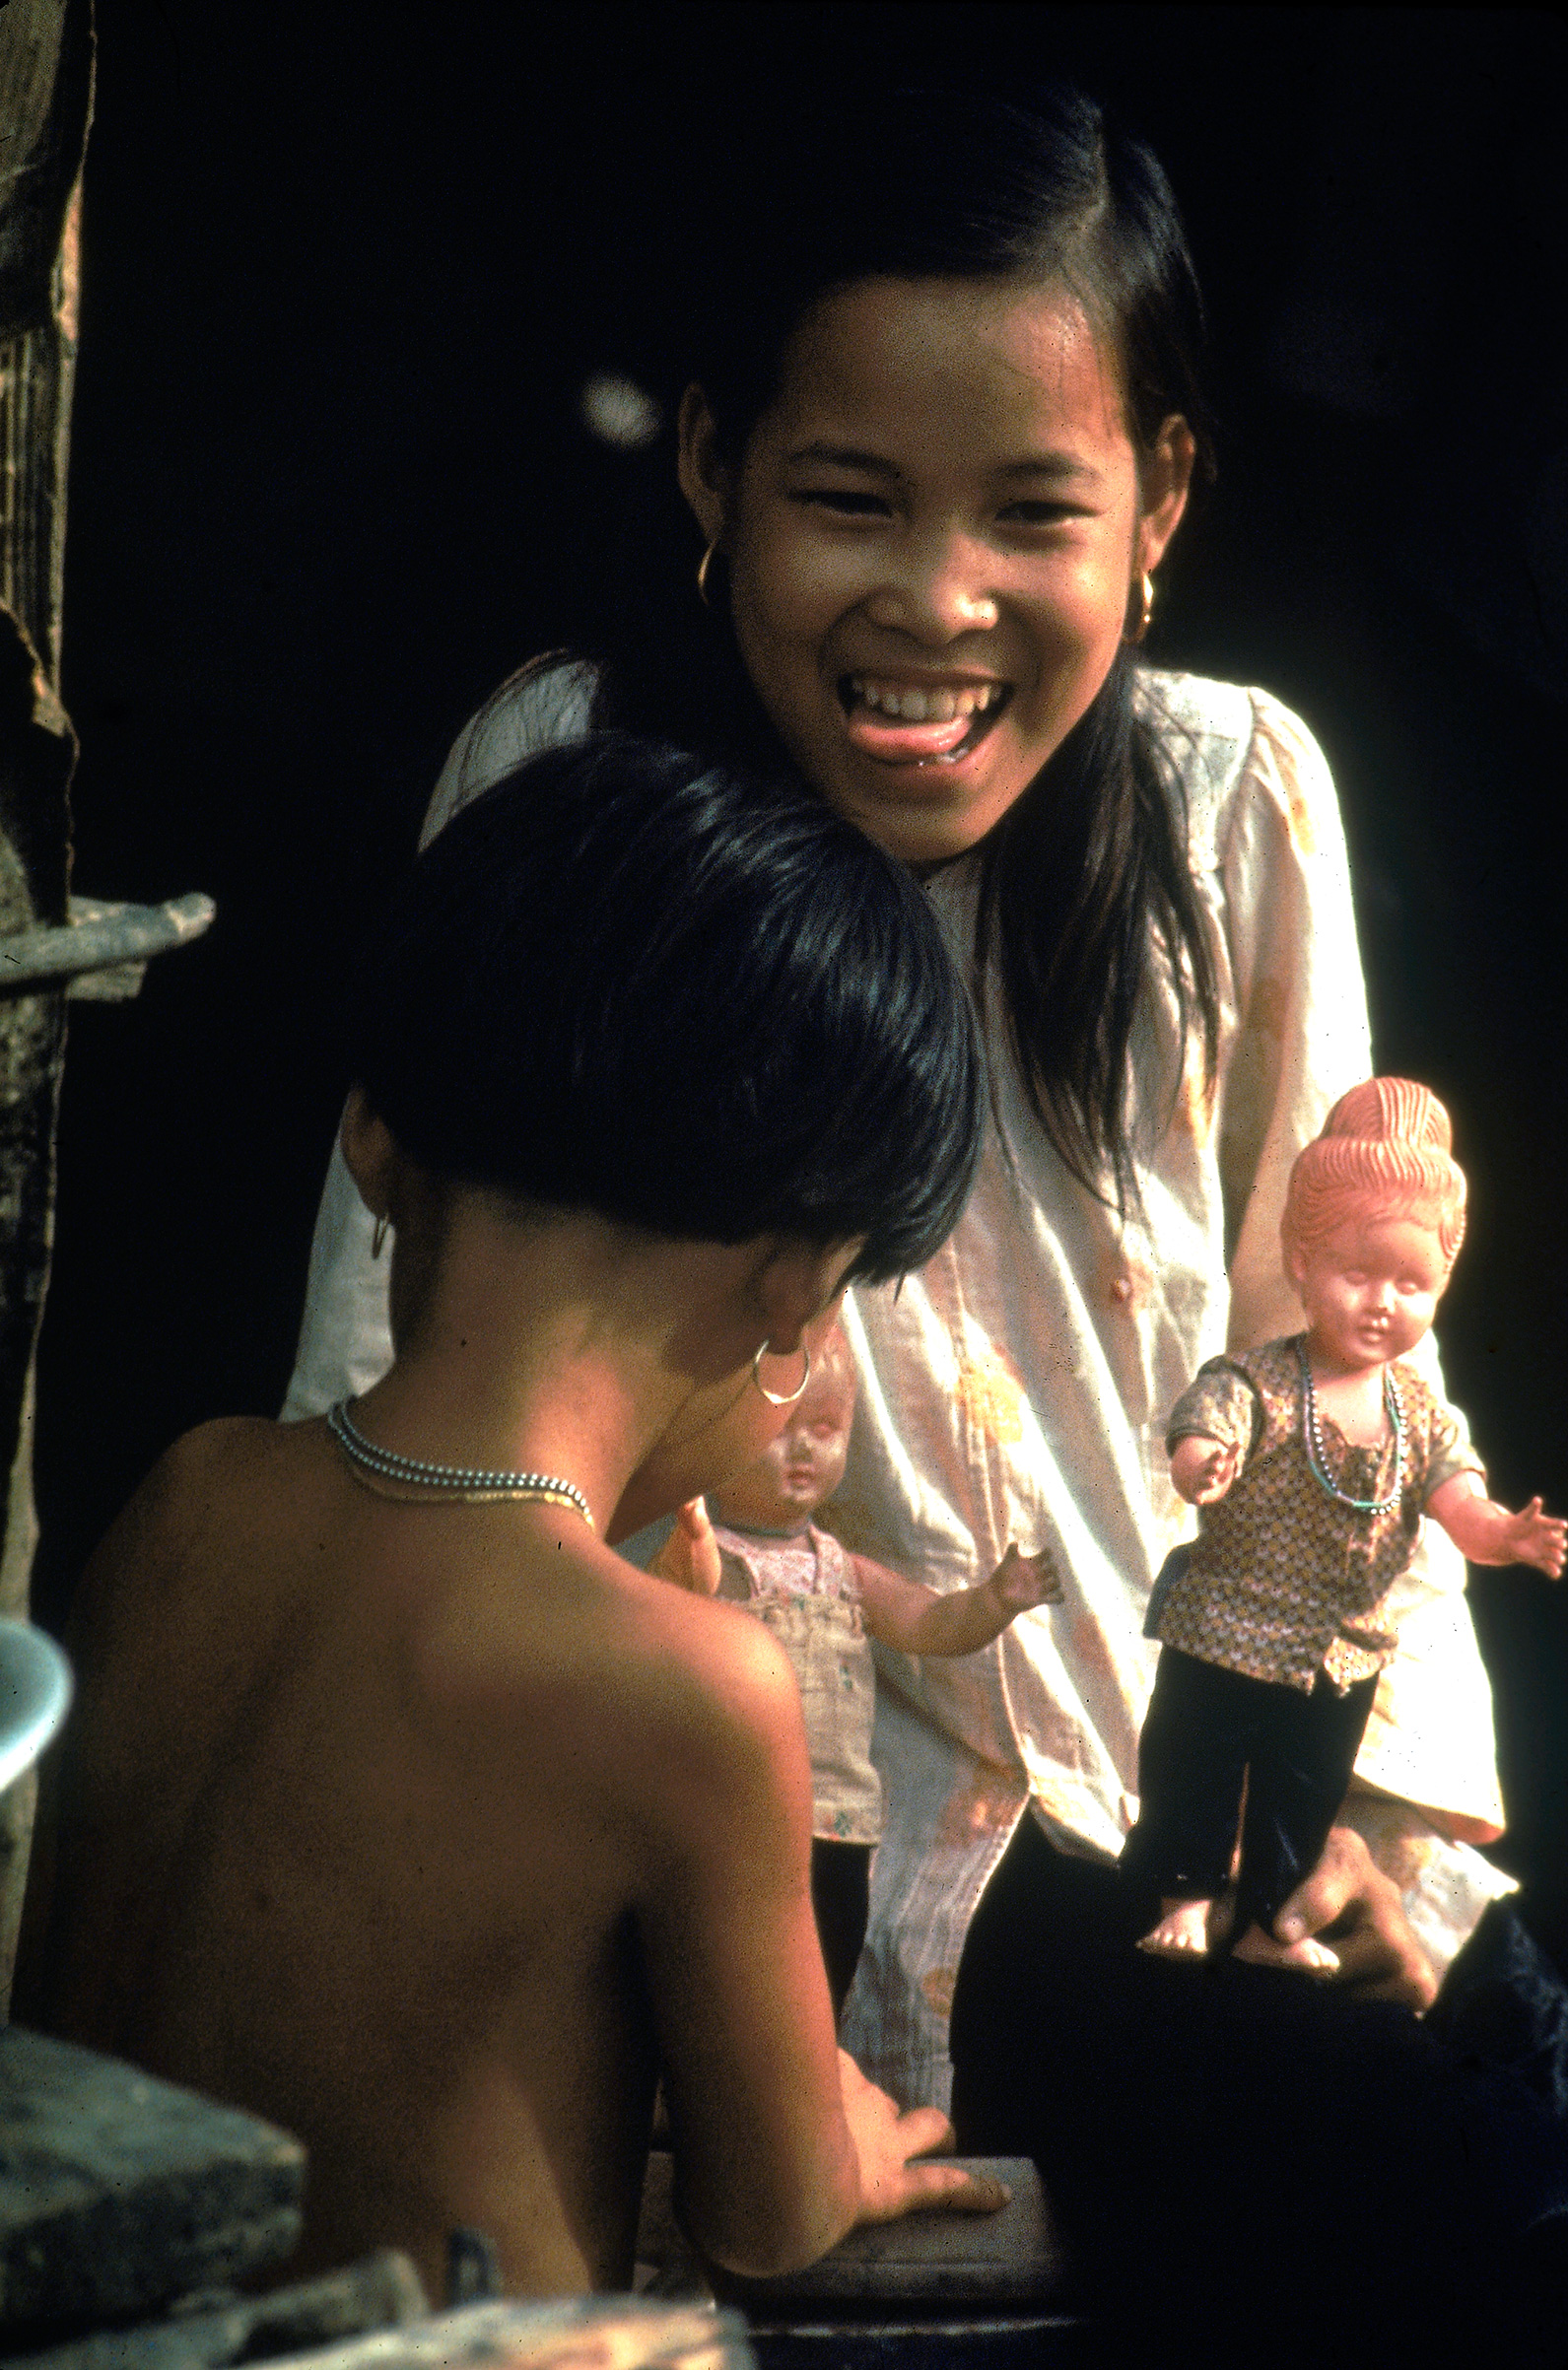 Vietnam war 1968 Larry Burrows photo essay "This Girl Tron."